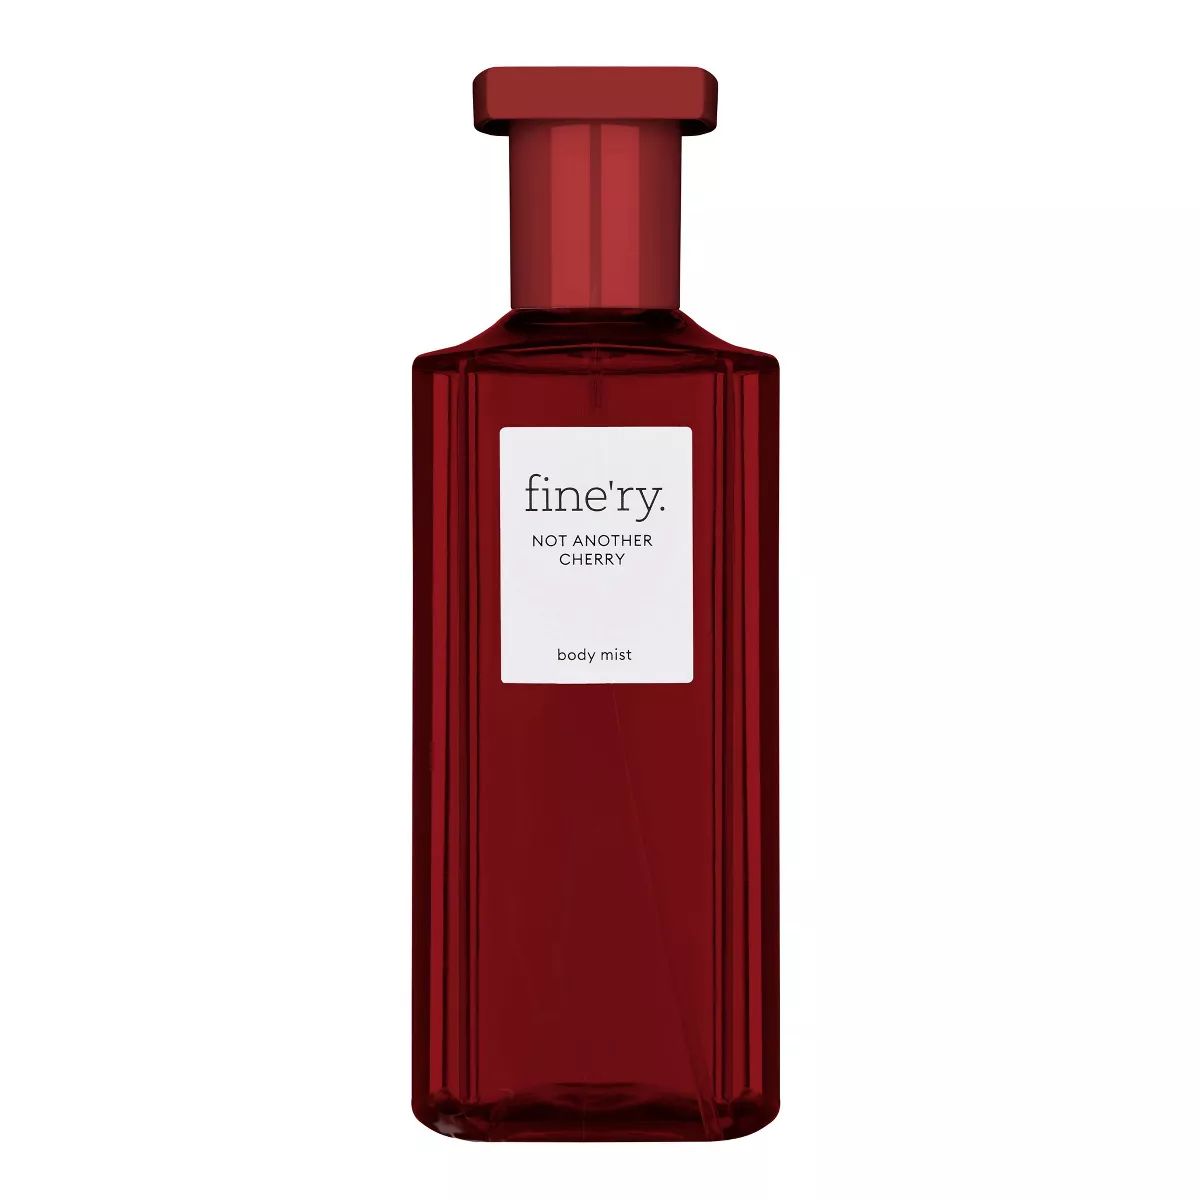 Fine'ry Body Mist Fragrance Spray - Another Cherry - 5 fl oz | Target